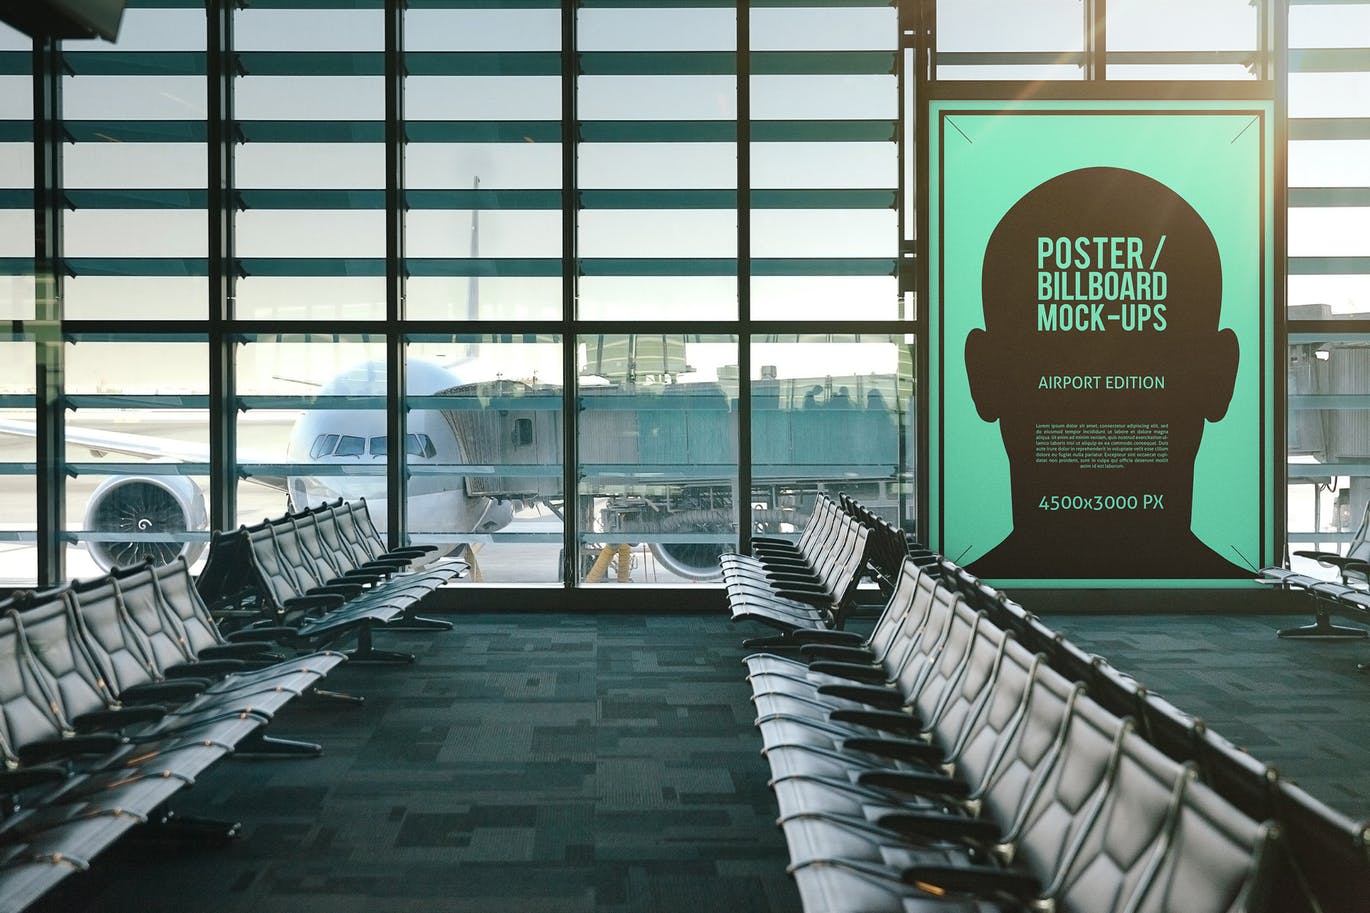 机场候机室海报/广告牌样机素材中国精选模板#1 Poster / Billboard Mock-ups – Airport Edition #1插图